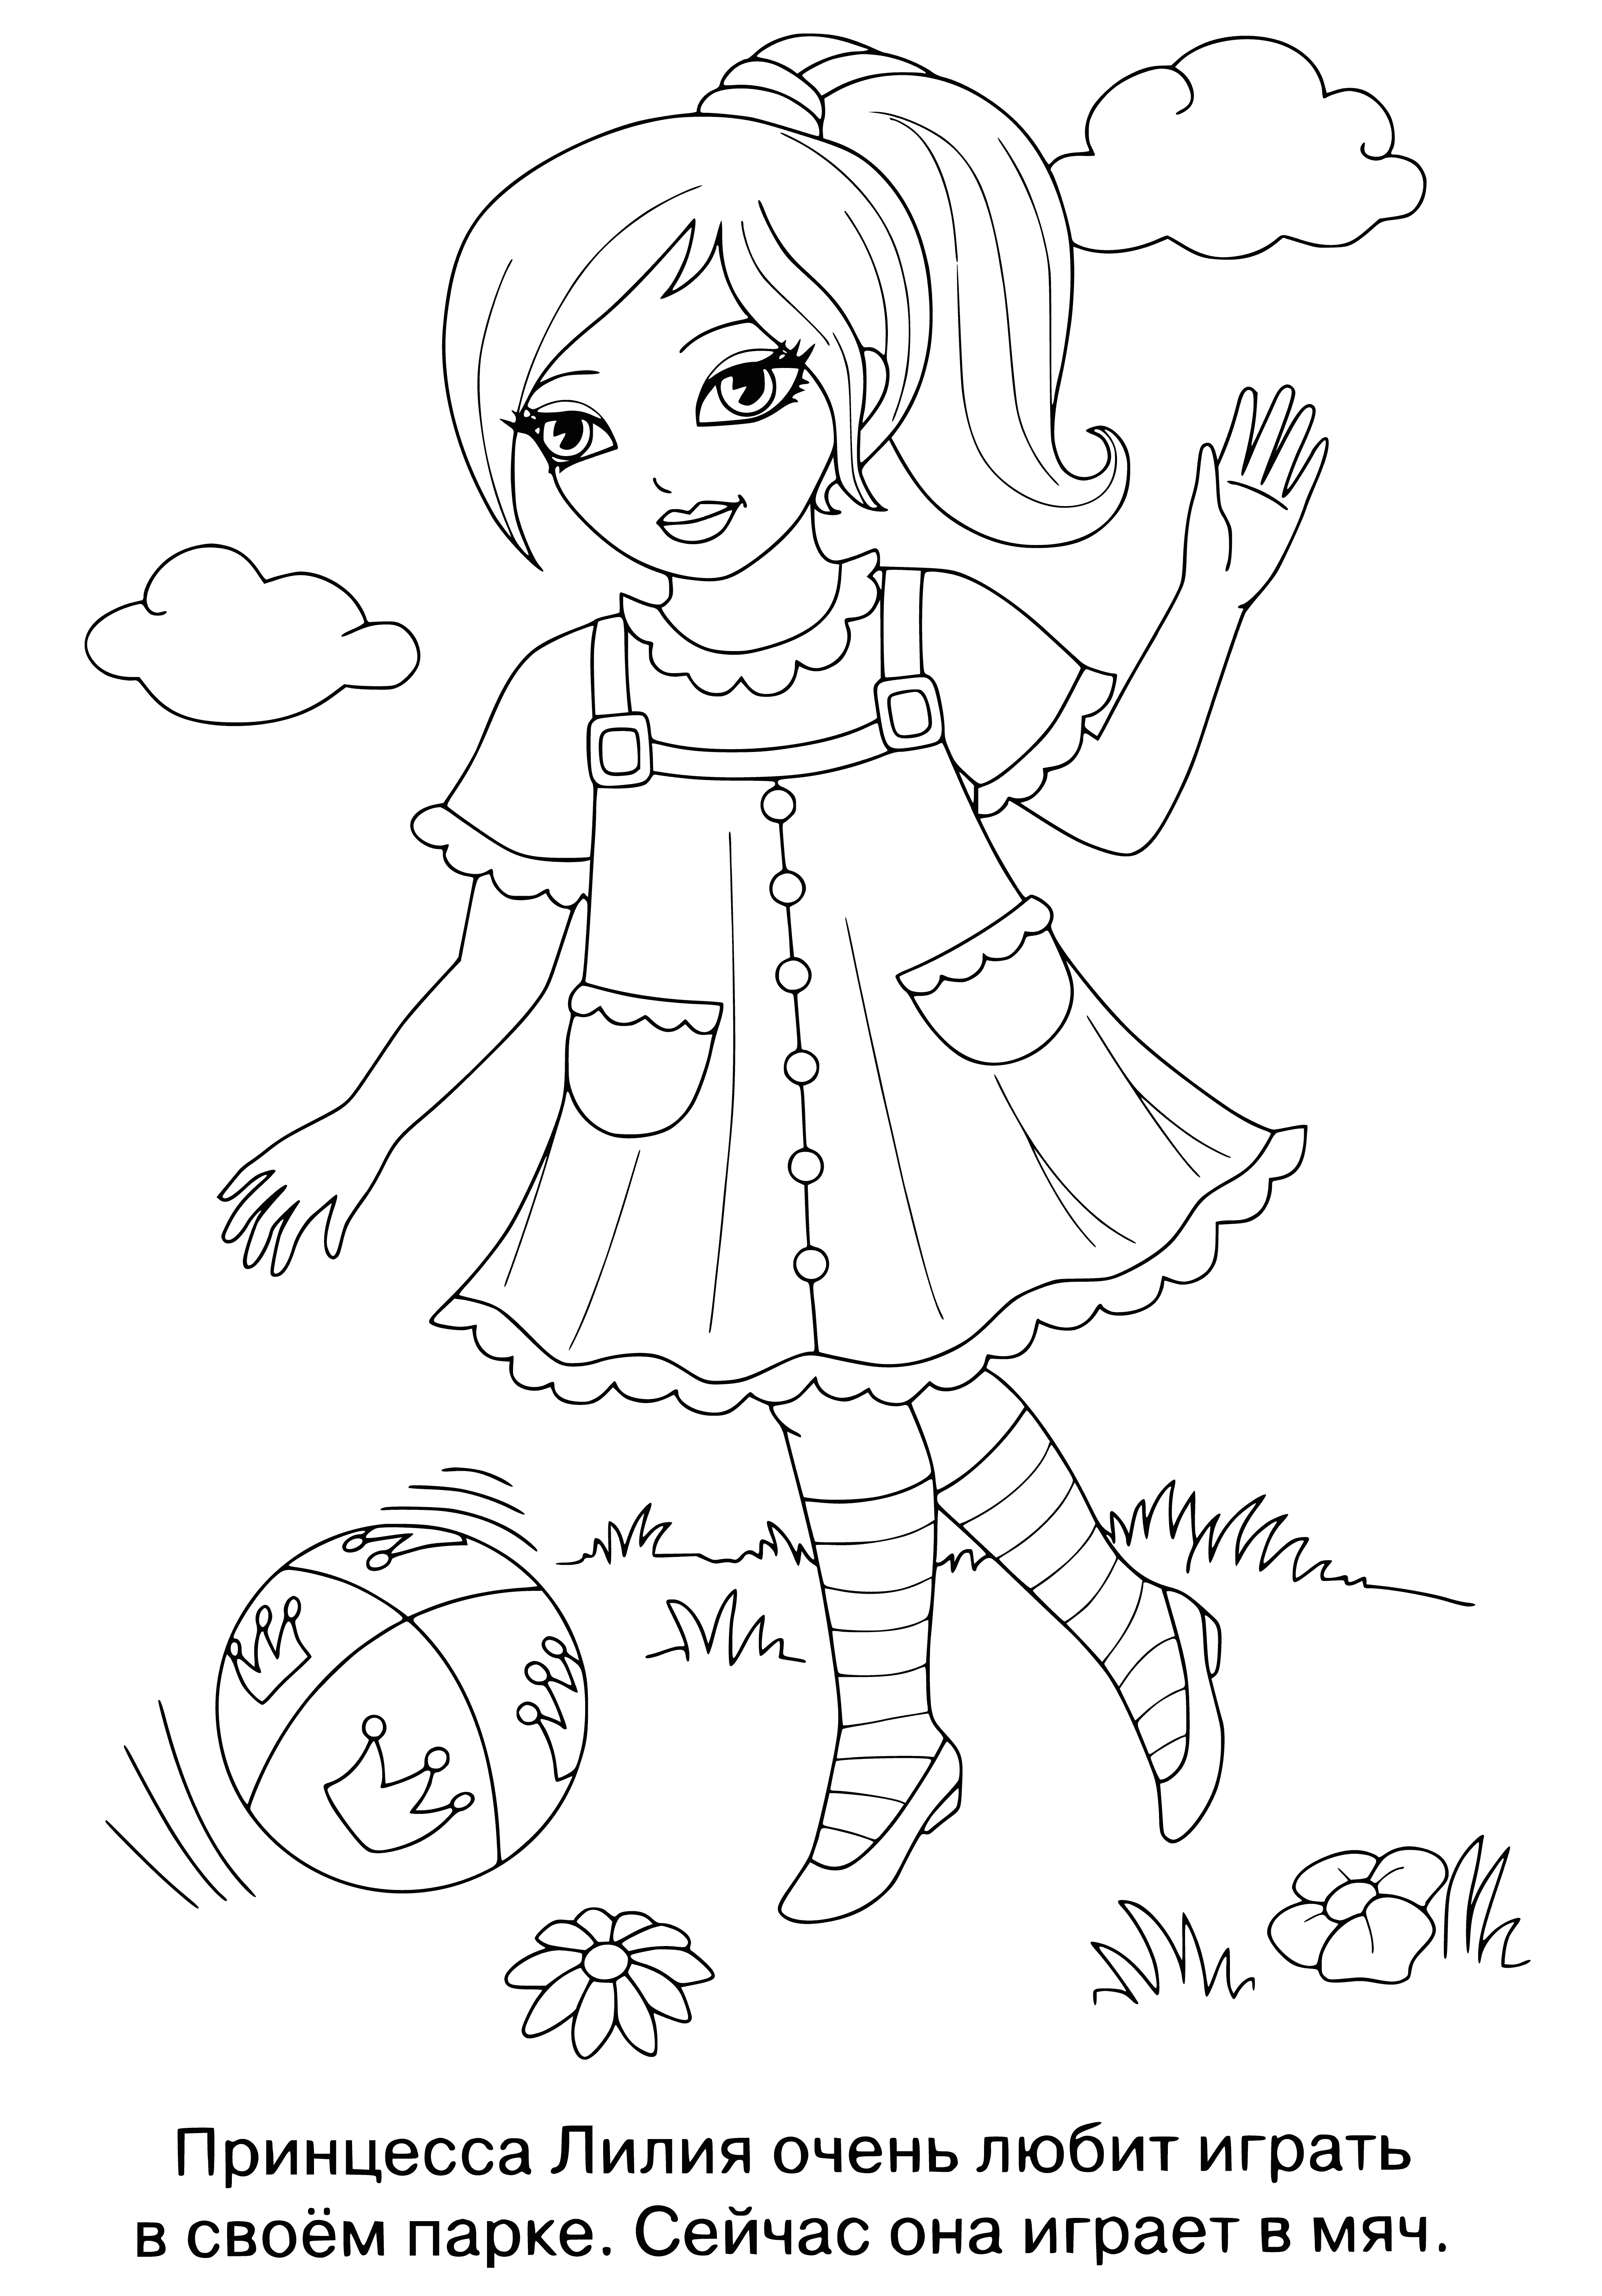 Princess lily coloring page